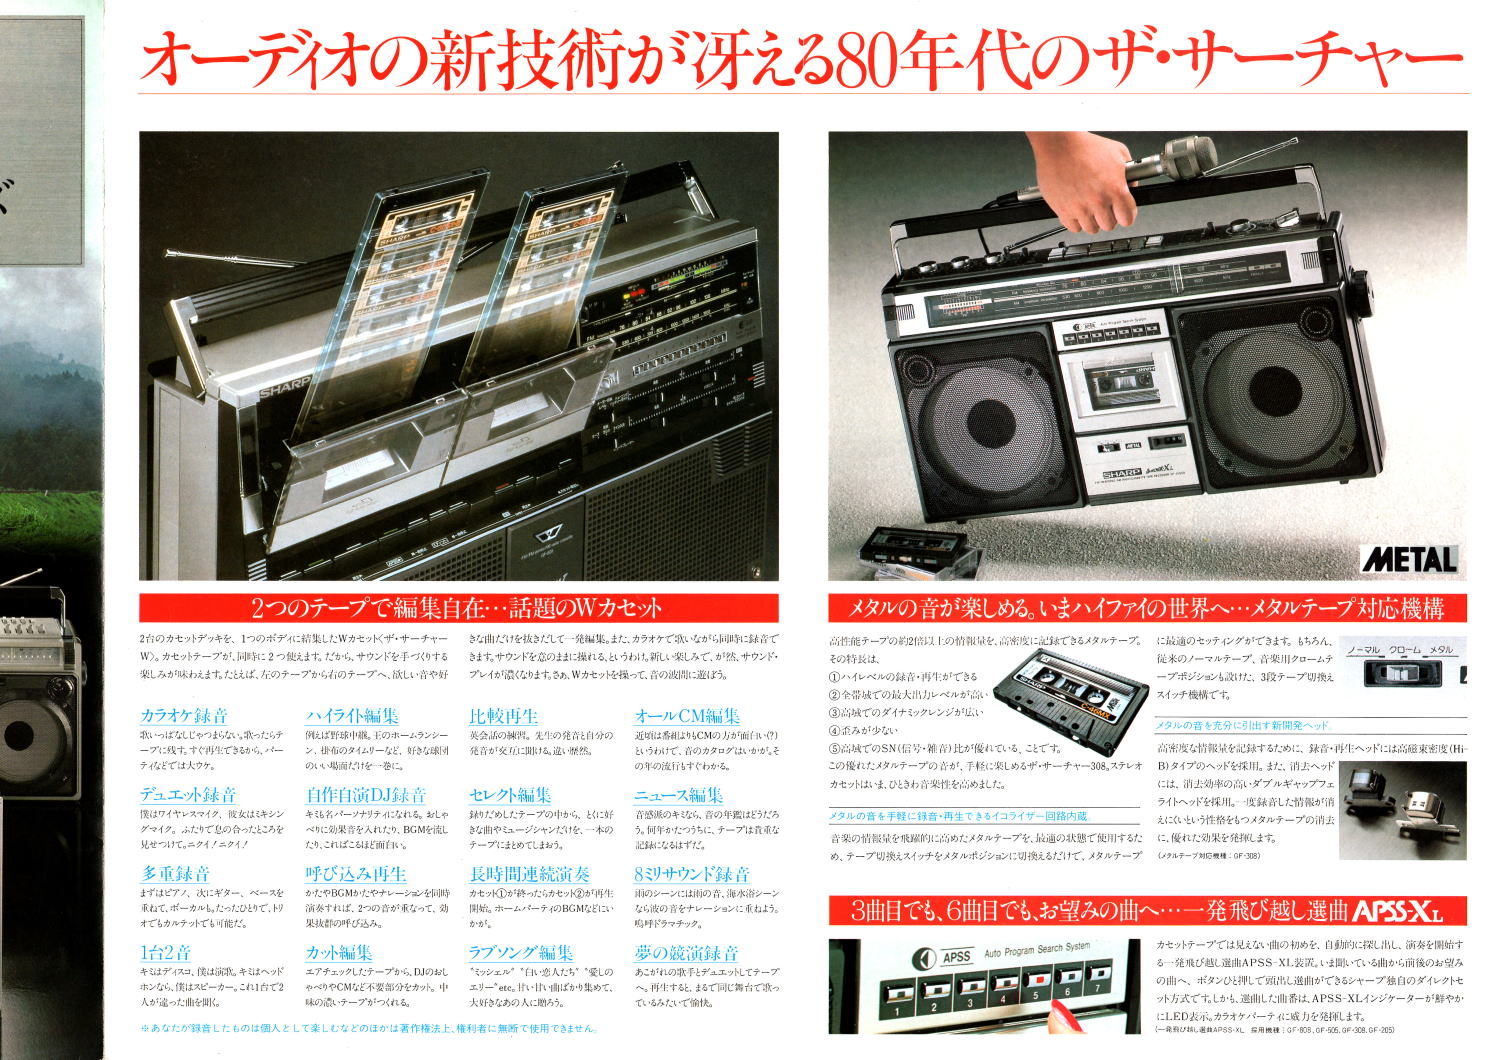 SHARP・ラジオ・ラジオカセット 1979年（昭和54年）